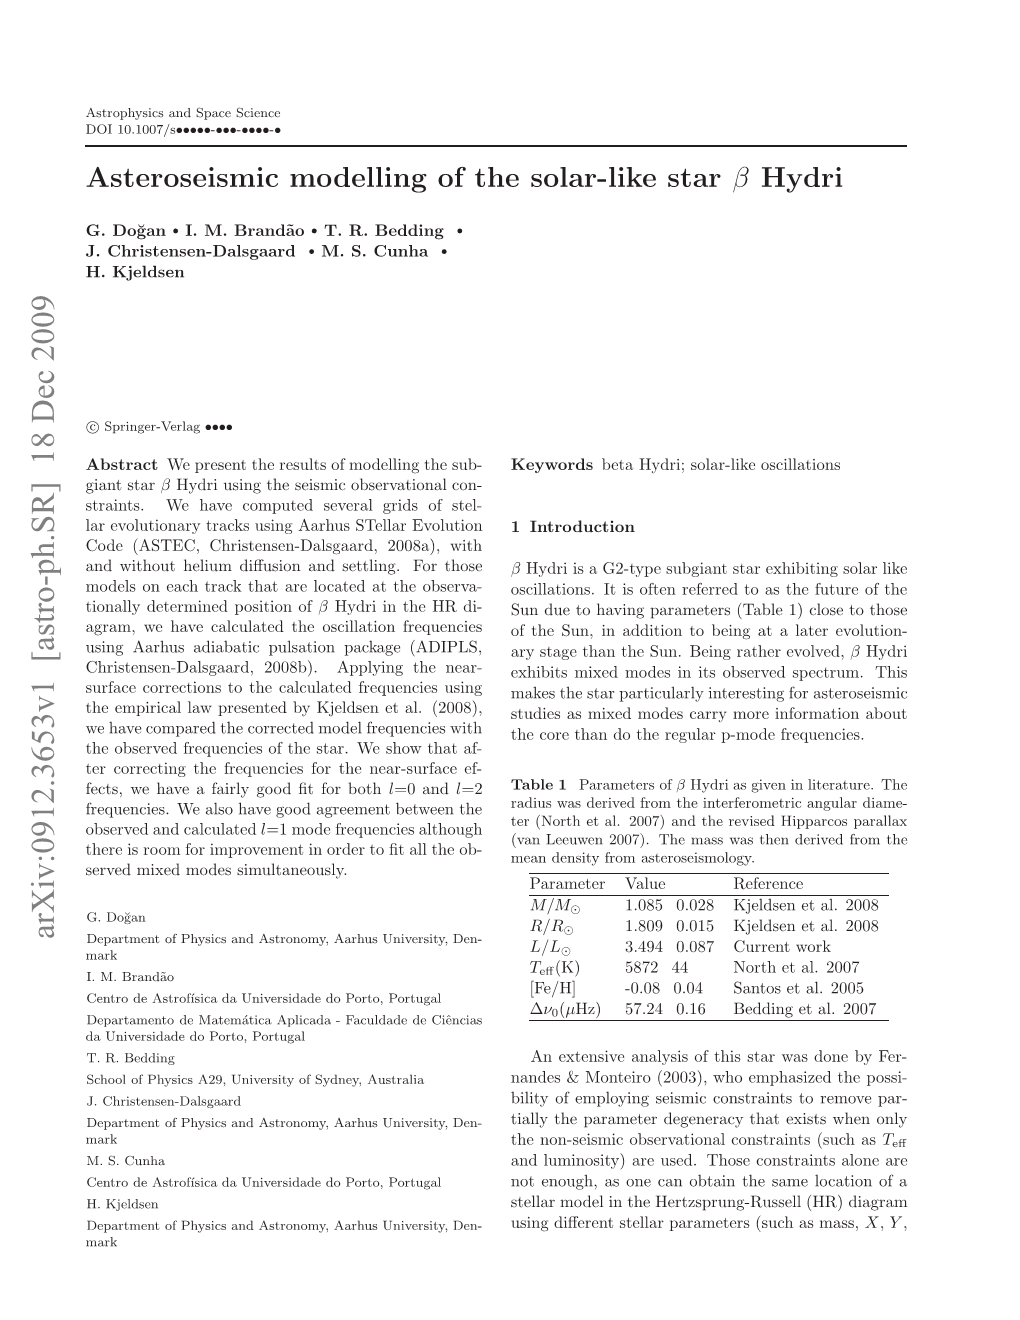 Asteroseismic Modelling of the Solar-Like Star $\Beta $ Hydri